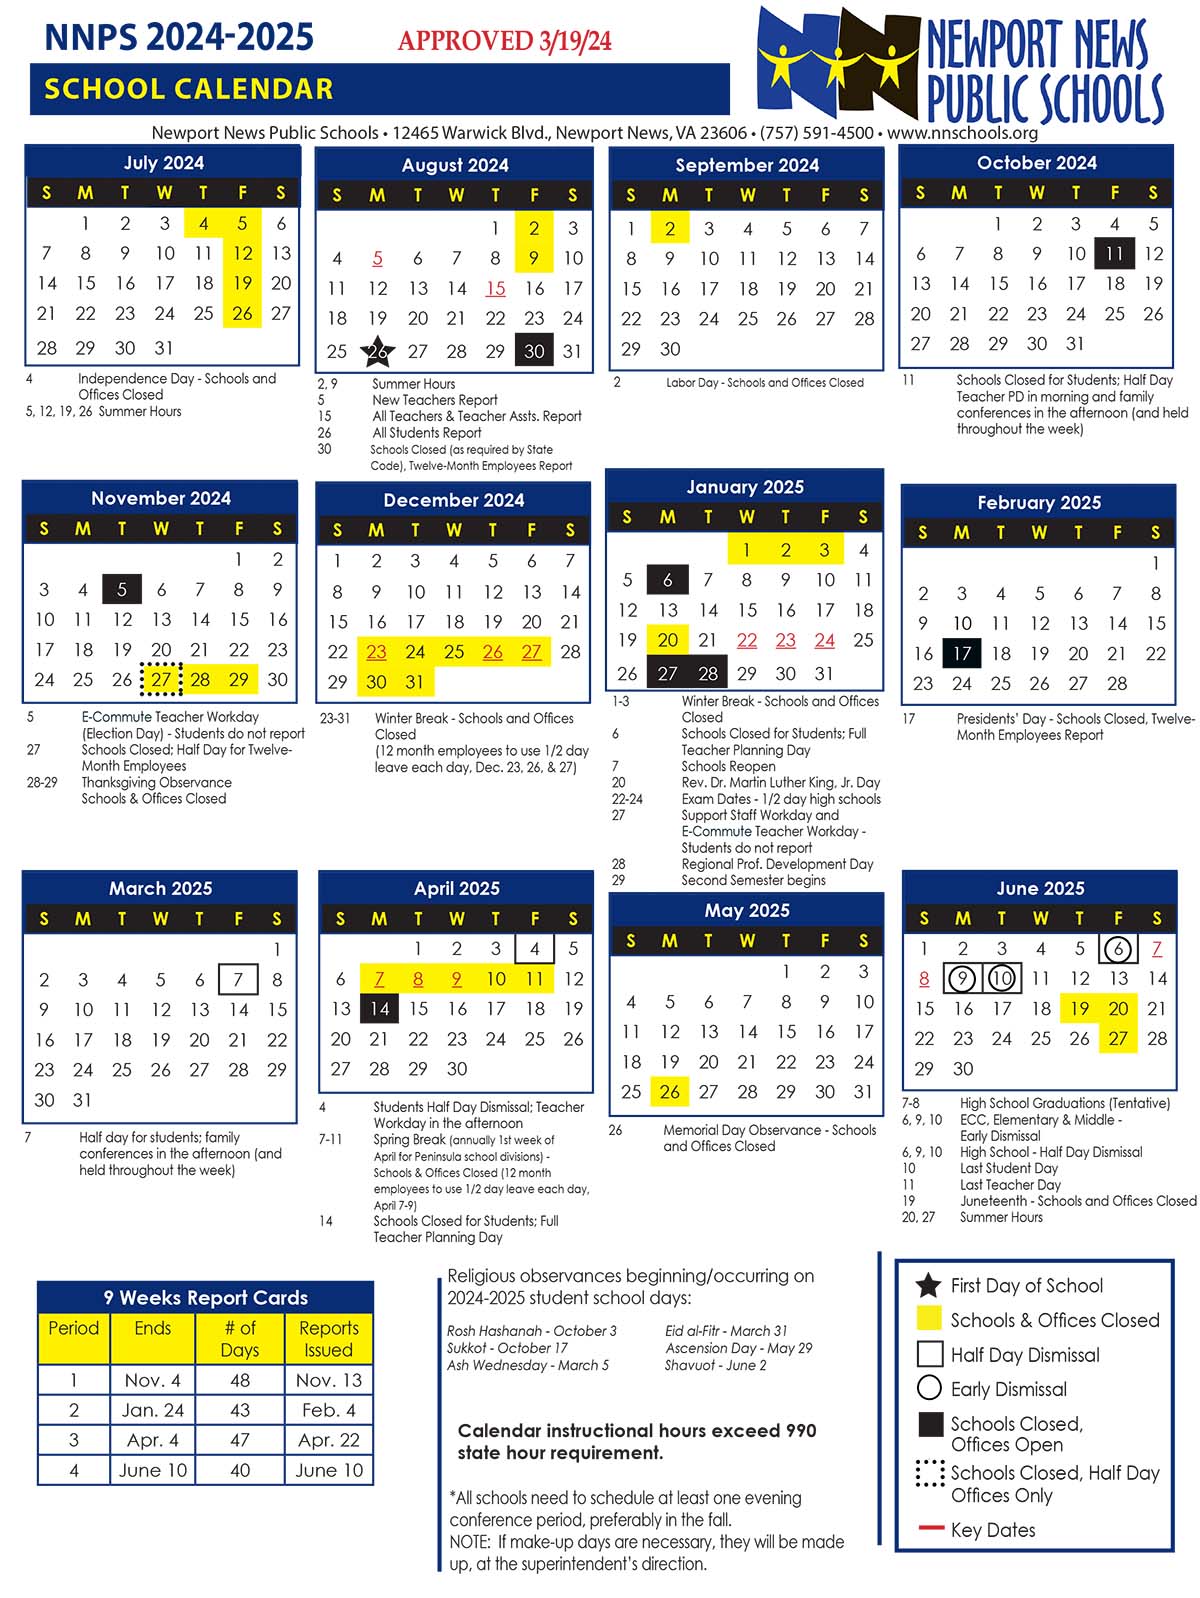 NNPS District Calendar: Click image to download pdf